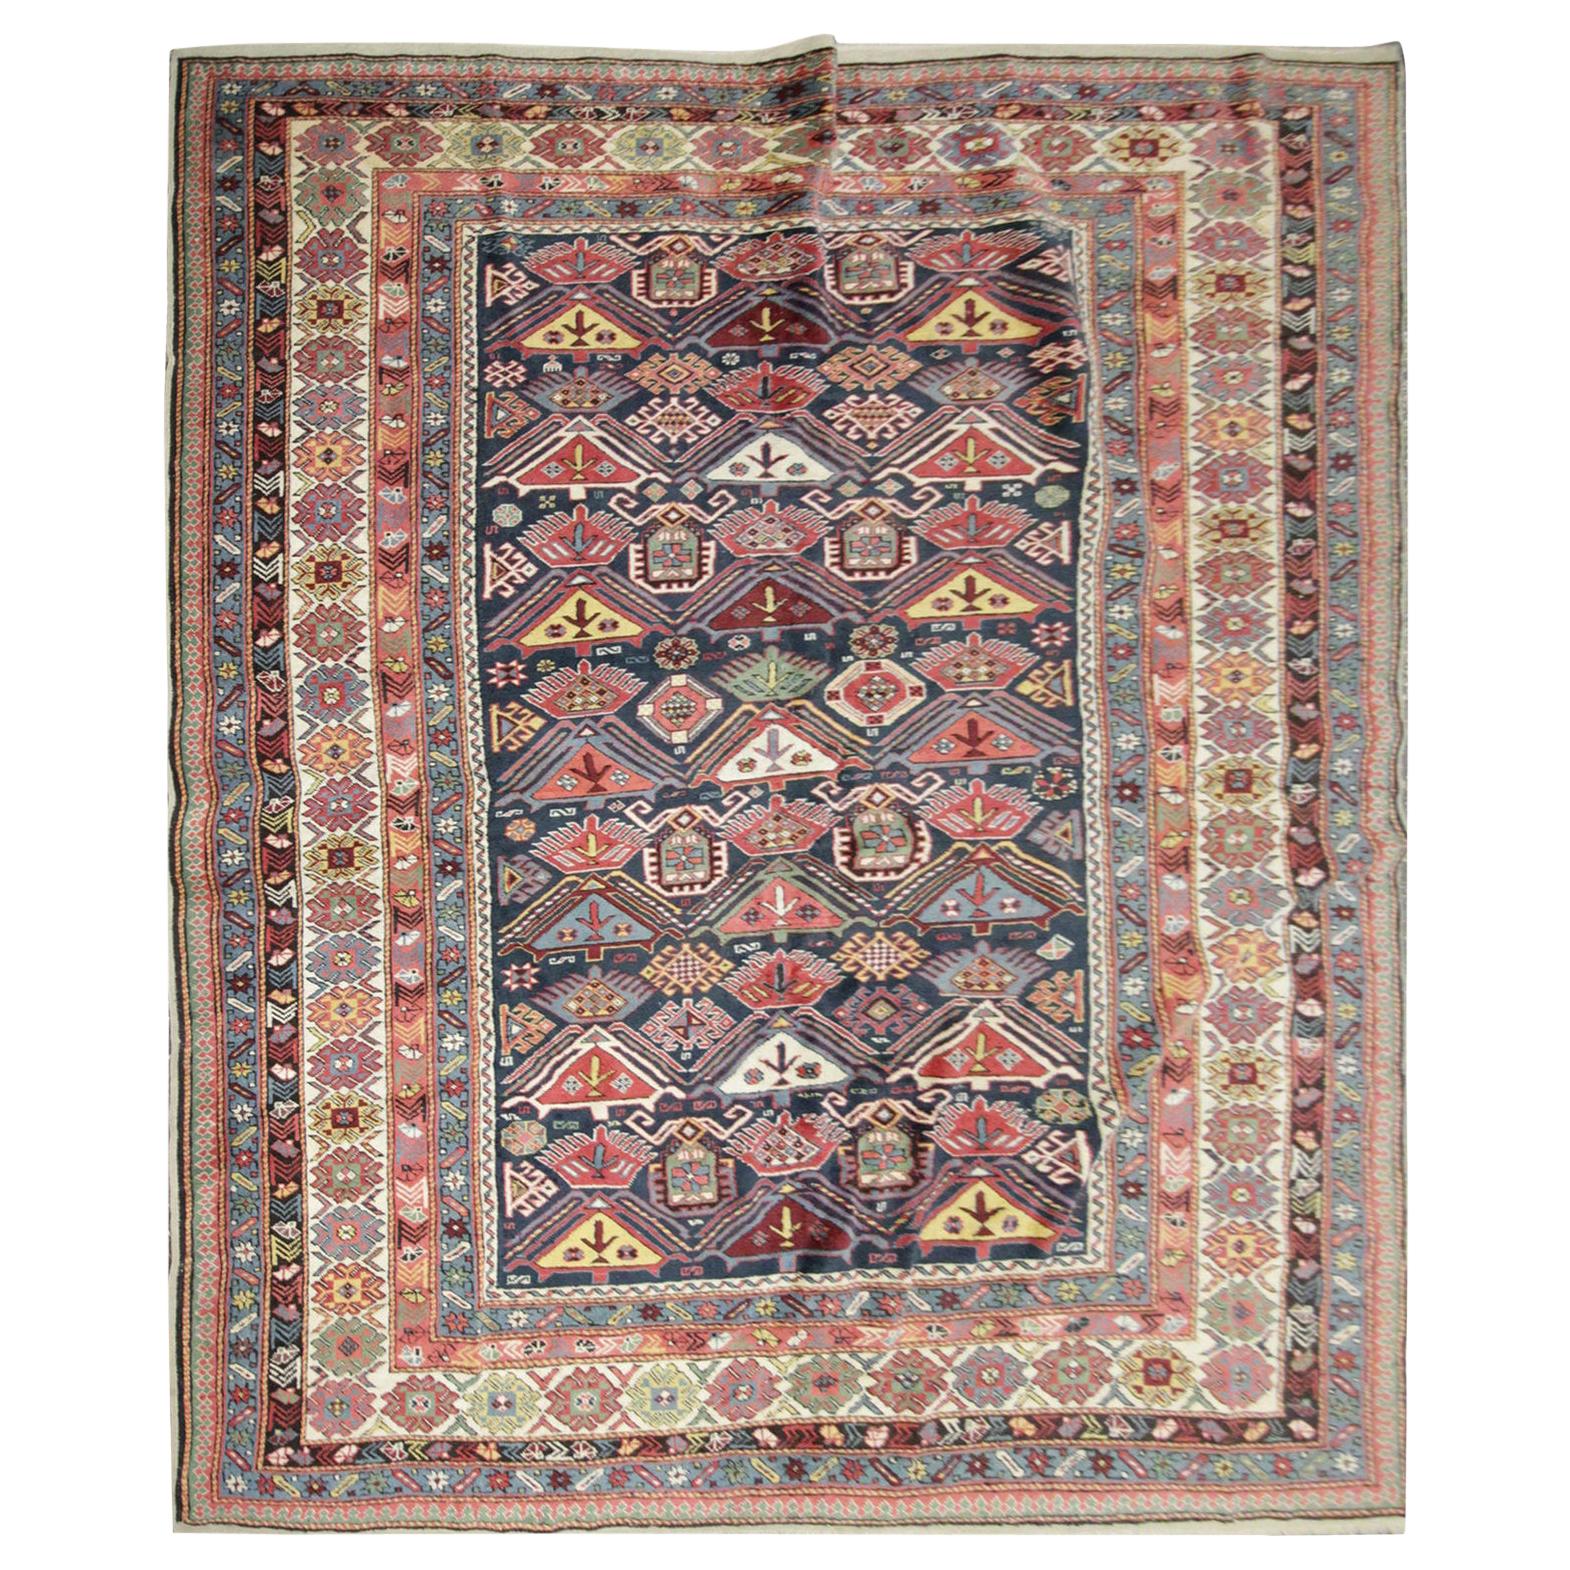 Tapis ancien, tapis artisanal du Caucase oriental, tapis de salon en vente en vente